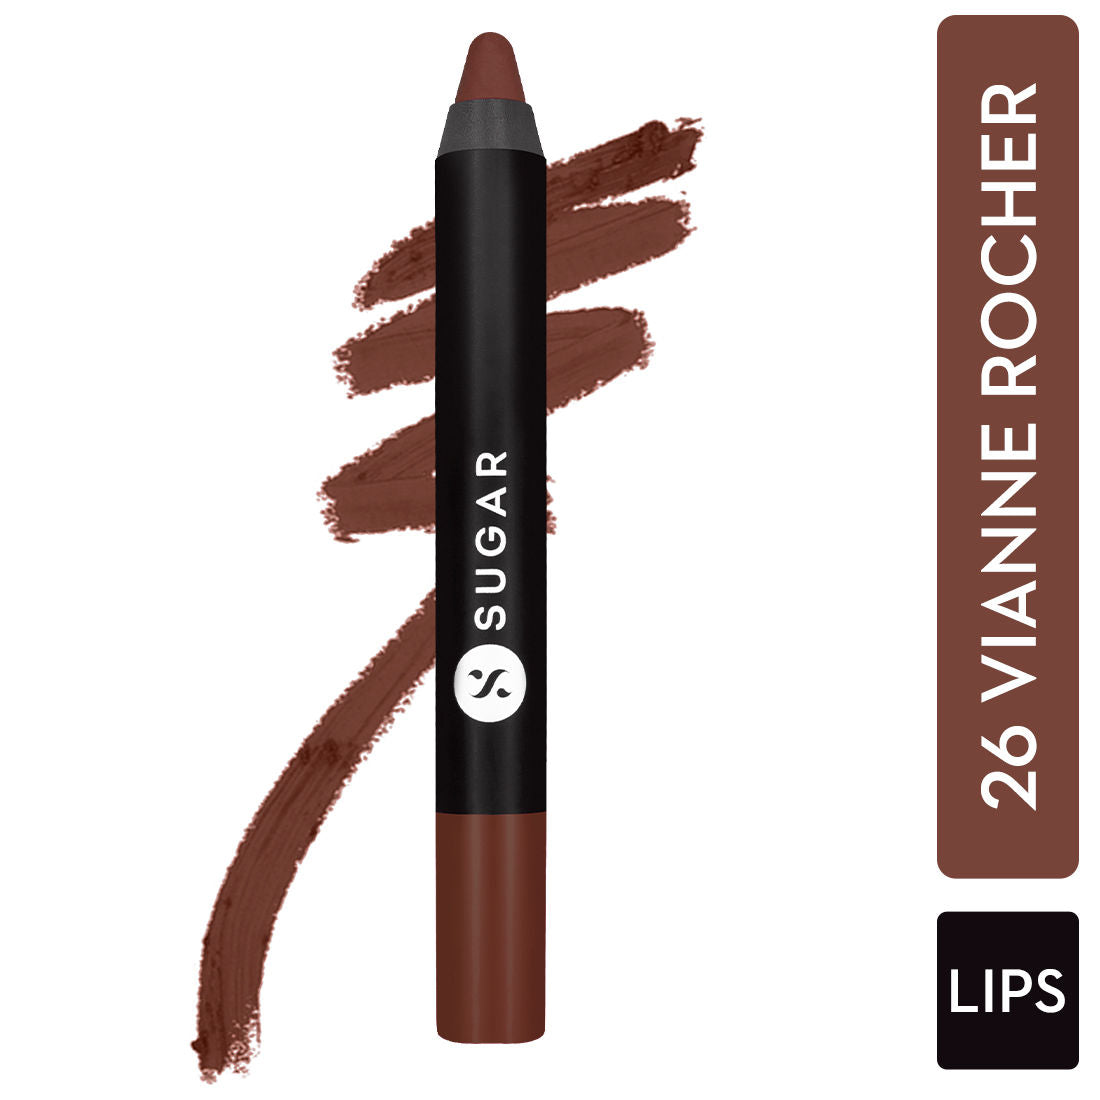 Sugar Matte As Hell Crayon Lipstick With Free Sharpener - 26 Vianne Rocher (Deep Chocolate Brown) (2.8G)